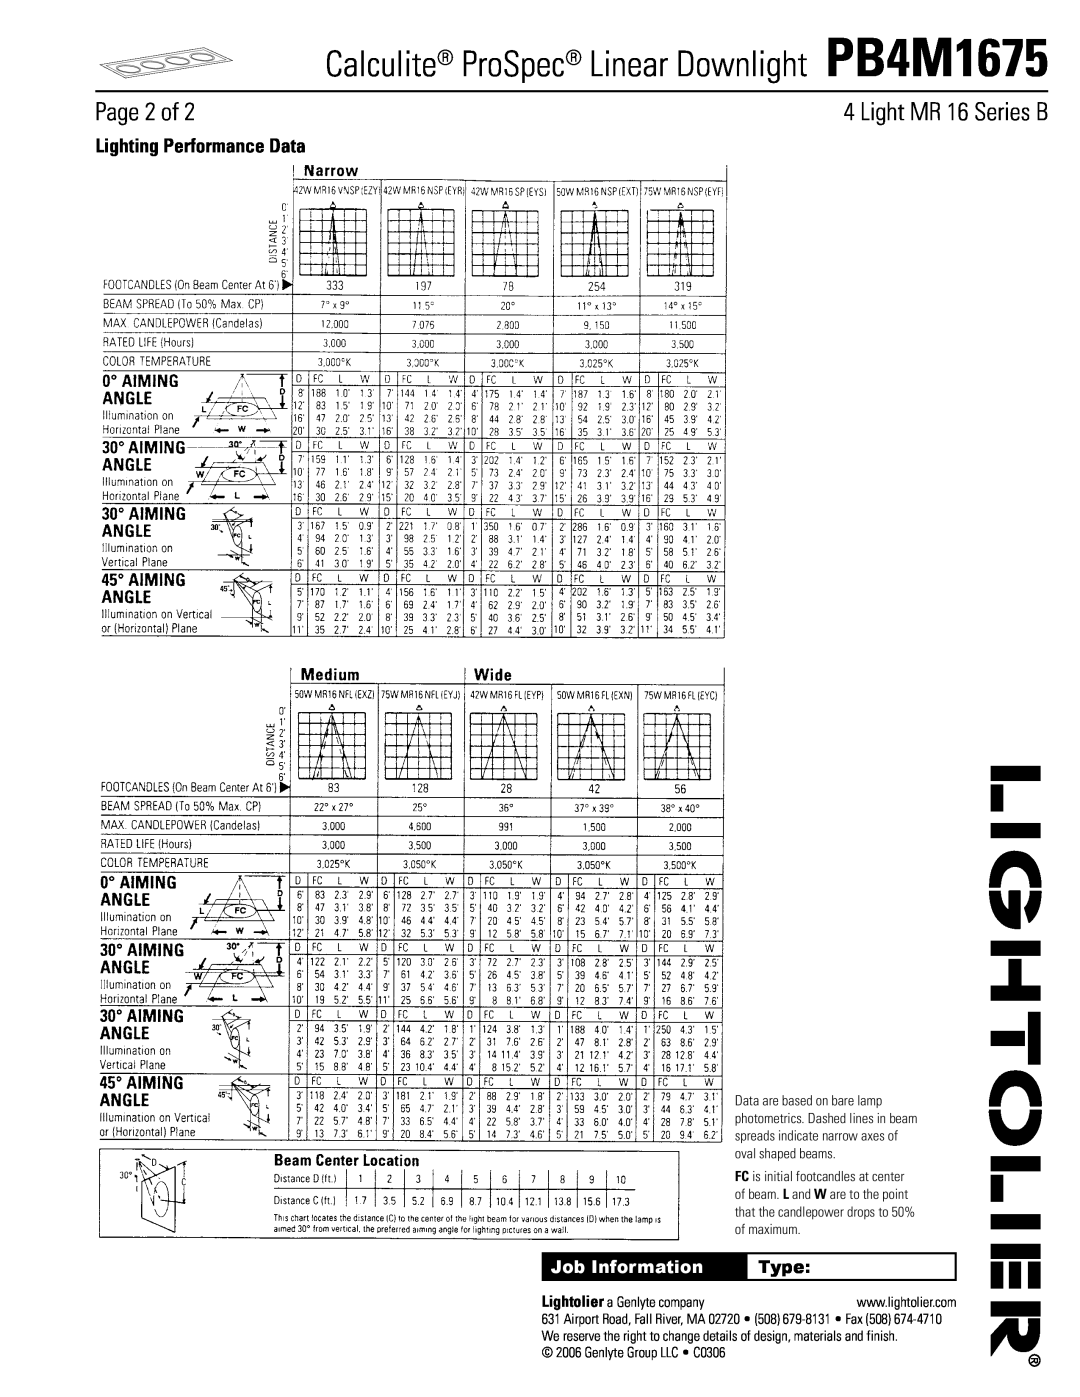 Lightolier manual Page 2 of, Light MR 16 Series B, Calculite ProSpec Linear Downlight PB4M1675, Job Information, Type 